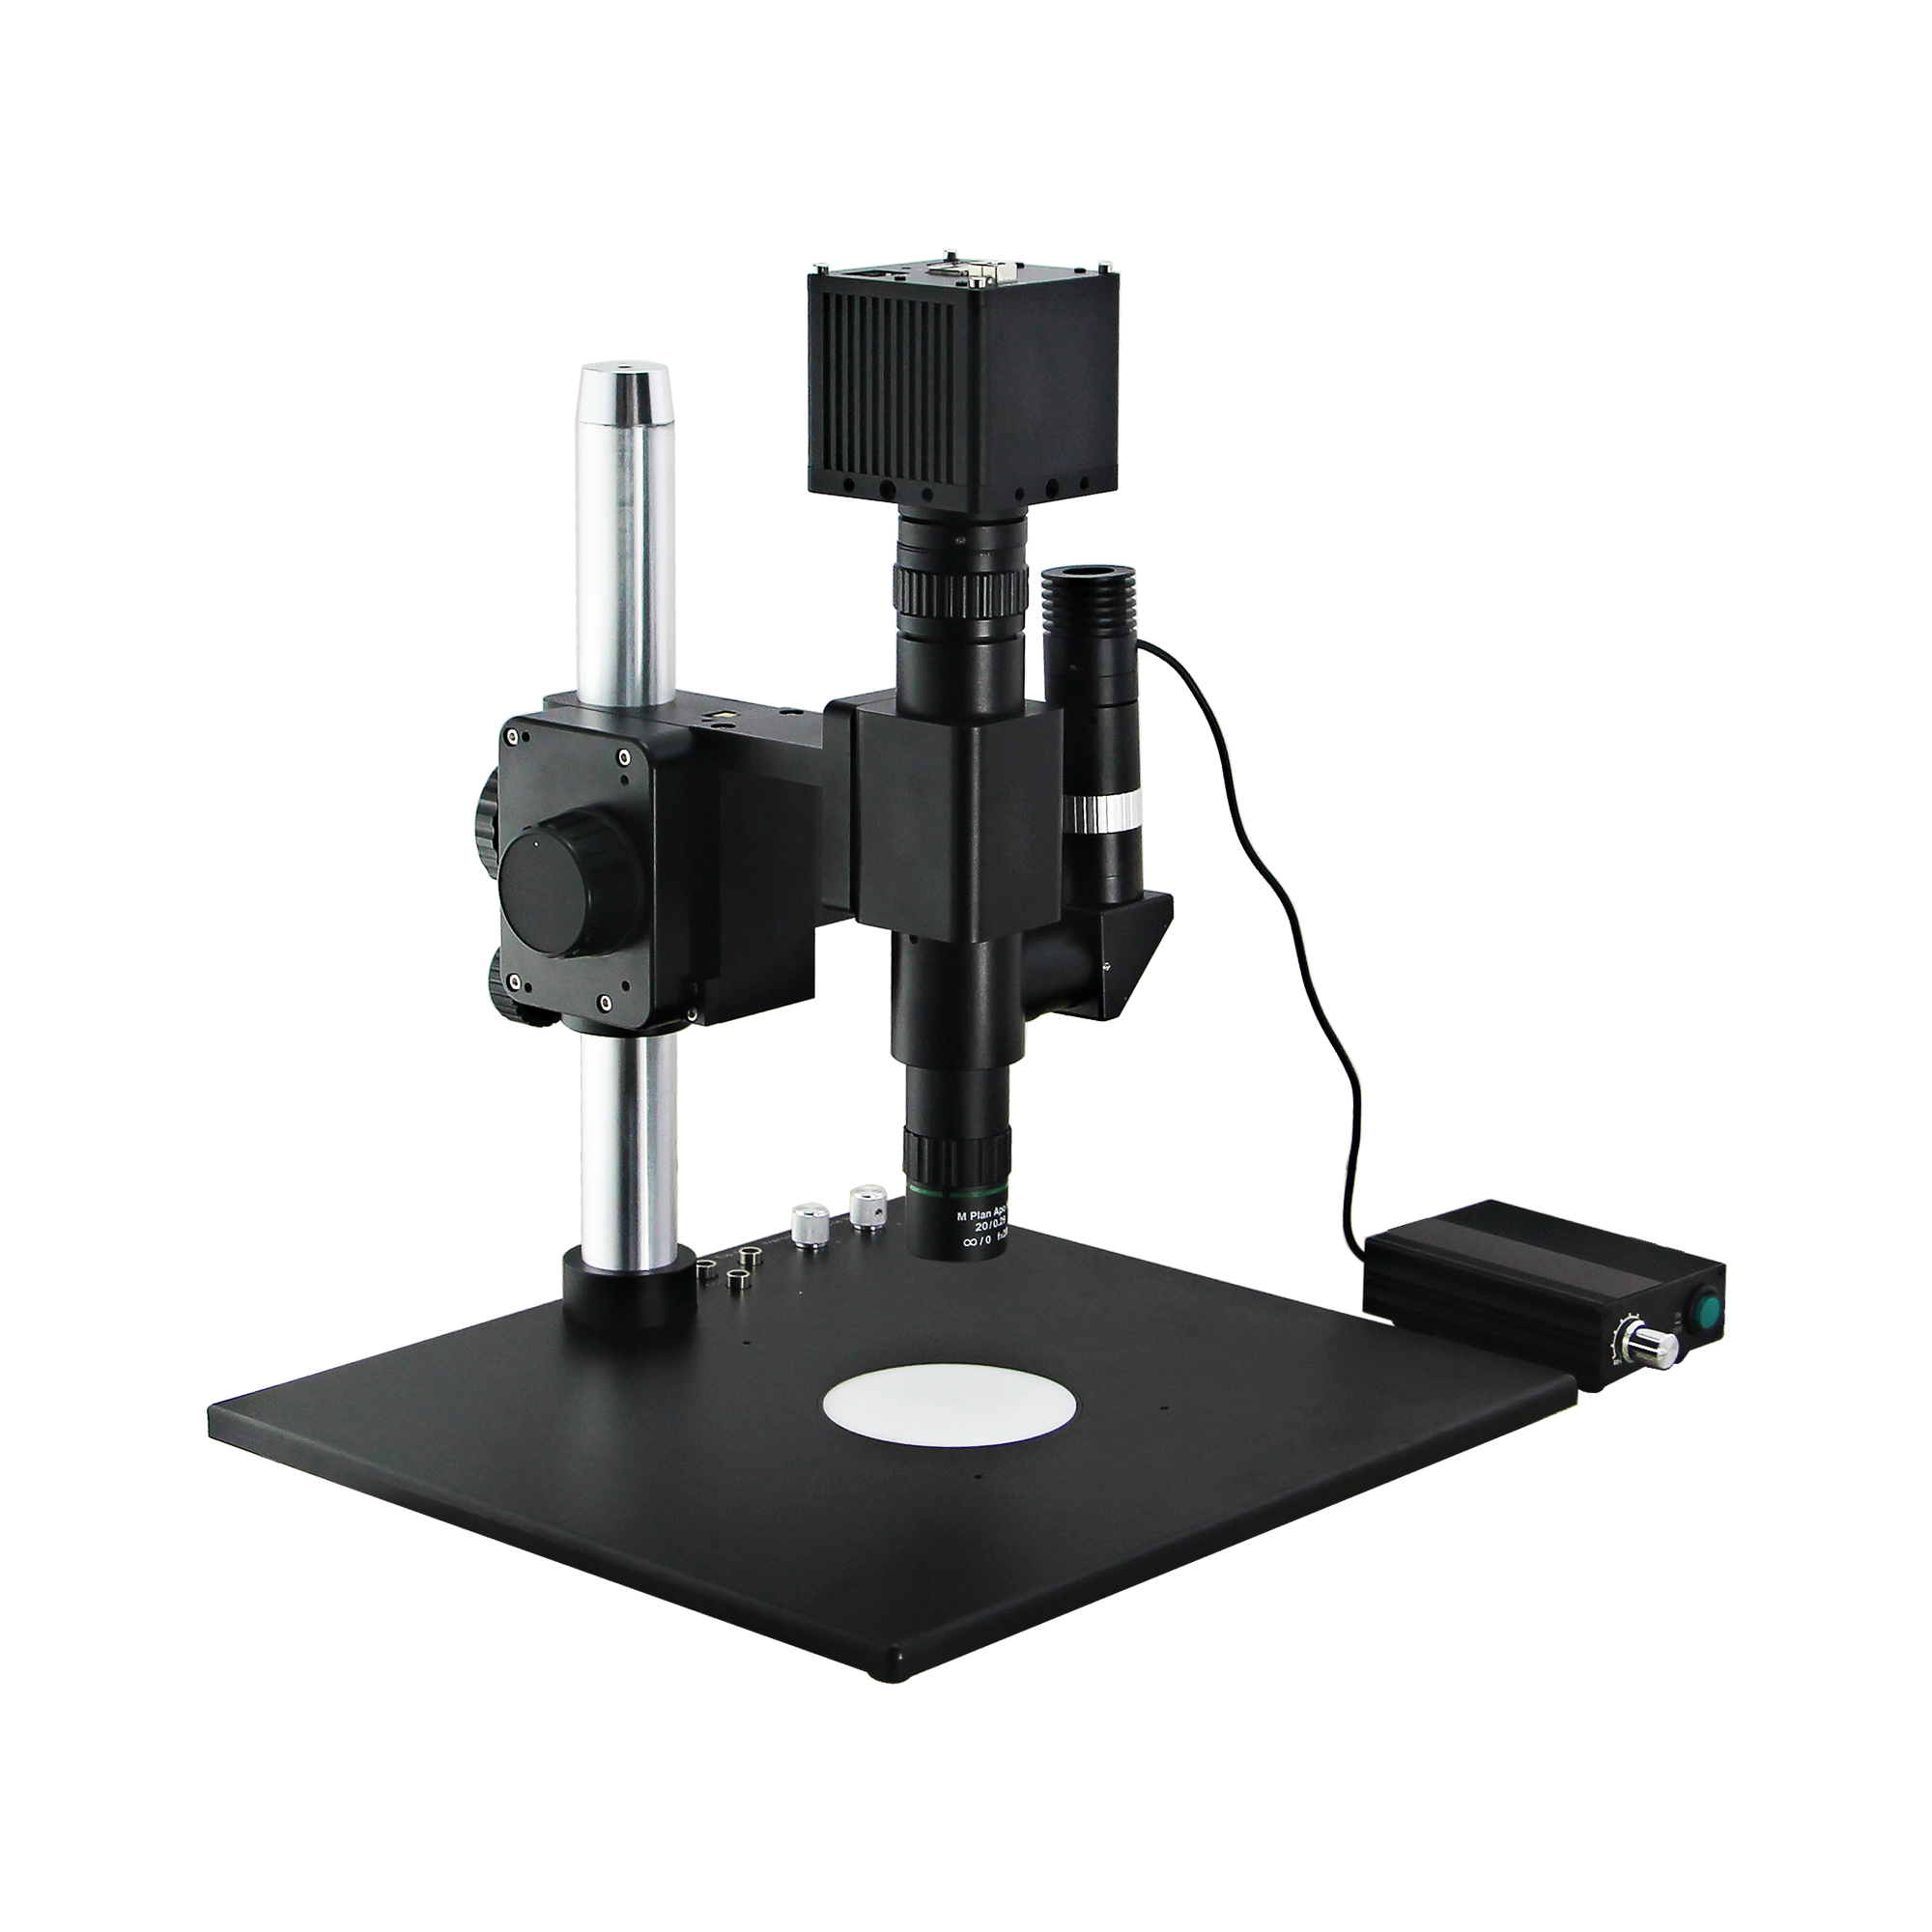 FM0010AM 自动对焦高倍测量显微镜